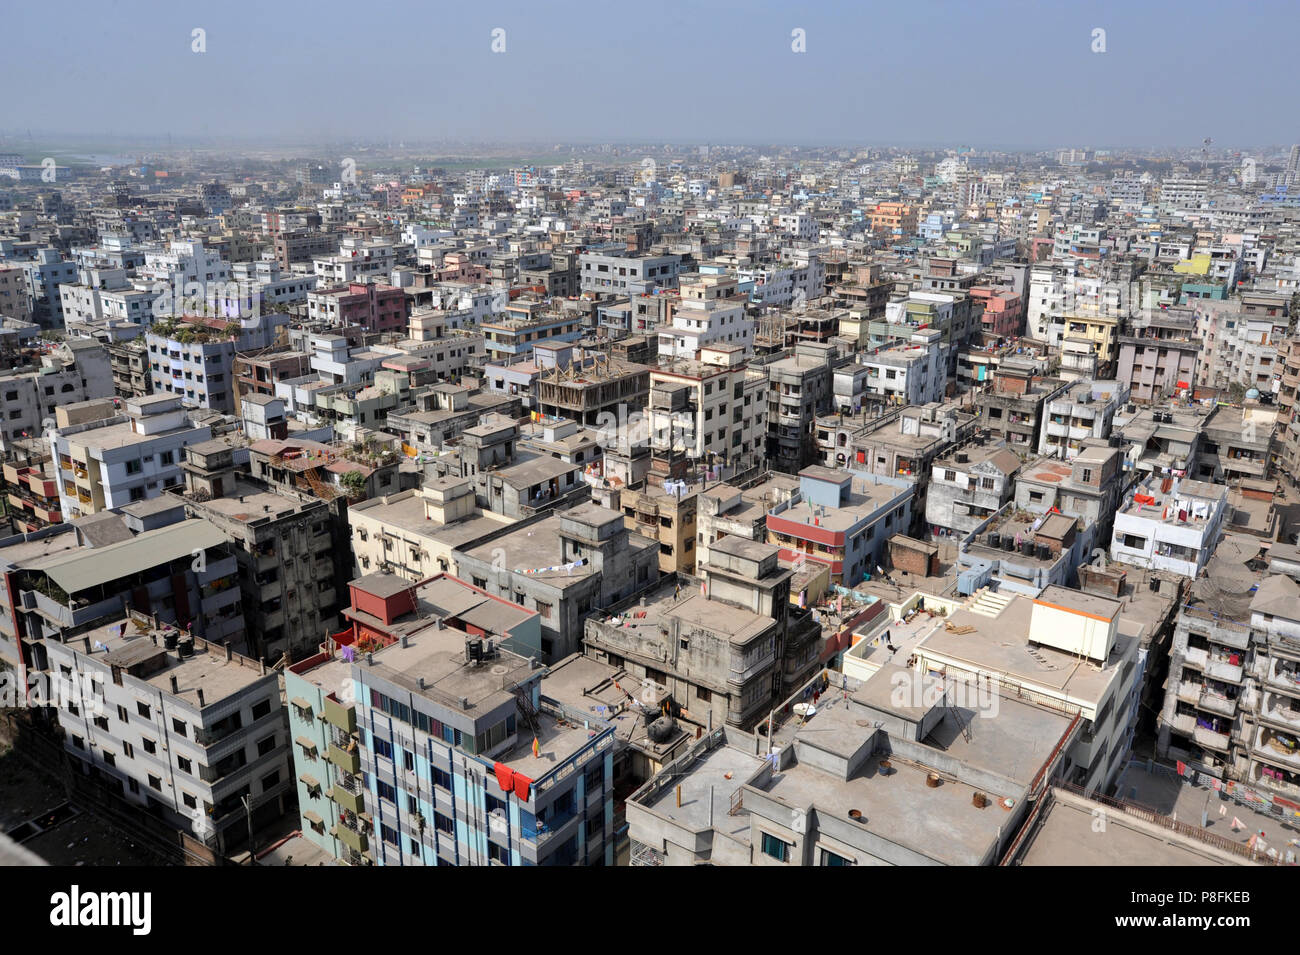 Dhaka, Bangladesh - January 13, 2010: A view of the Dhaka Metropolitan city Mohammadpur area. Dhaka, a city of over 15 million people, appears to be b Stock Photo